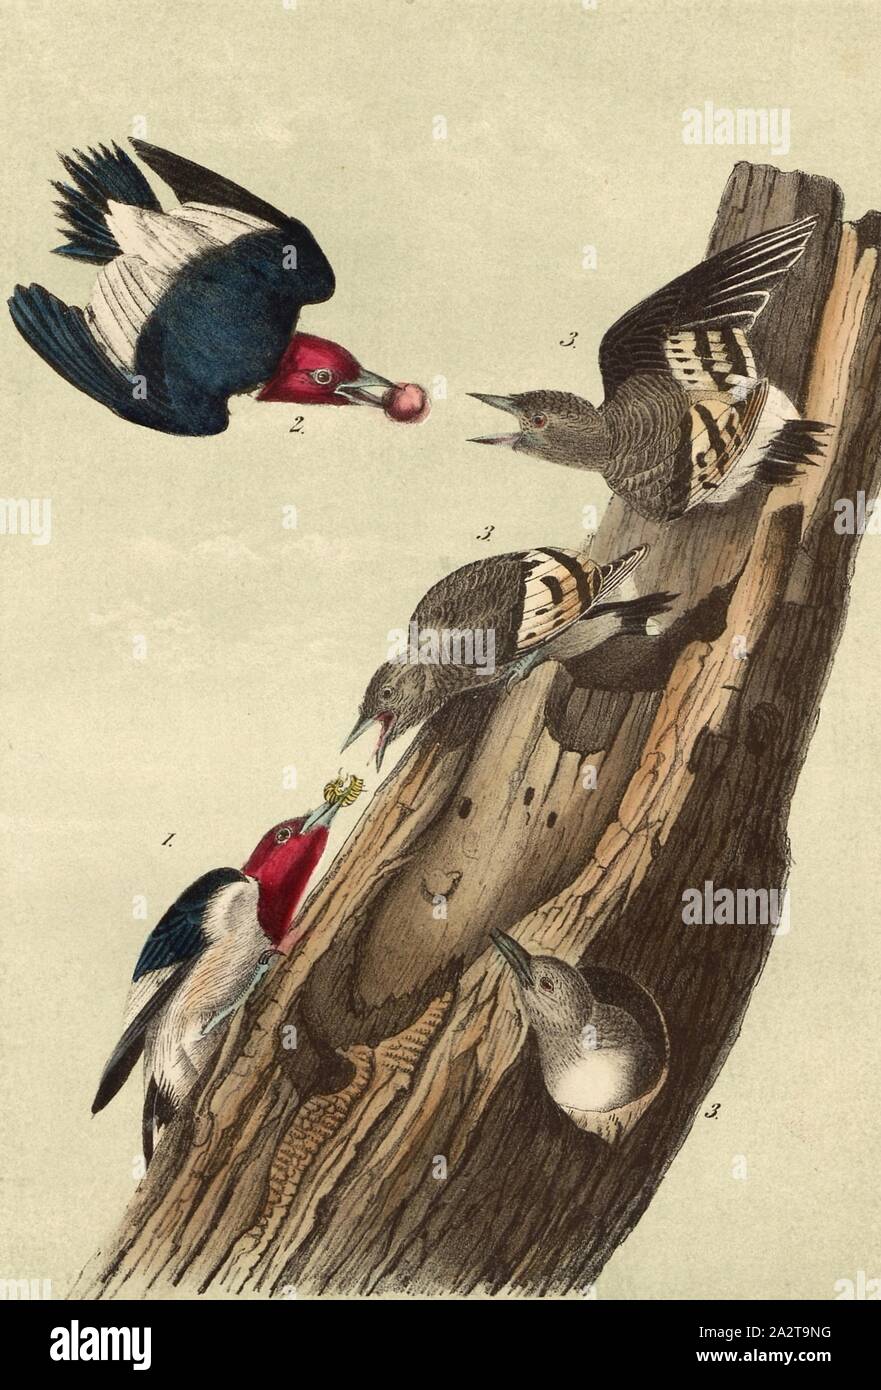 Rojo-haeded pájaro carpintero, carpintero de cabeza roja (Melanerpes erythrocephalus, Picus erythrocephalus), firmado: J.J. Audubon, J.T. Bowen, litografía, Pl. 271 (vol. 4), John James Audubon (dibujado); Bowen, J. T. (lith.) de 1856, John James Audubon: Las Aves de América: a partir de los dibujos realizados en los Estados Unidos y sus territorios. Nueva York: Audubon, 1856 Foto de stock